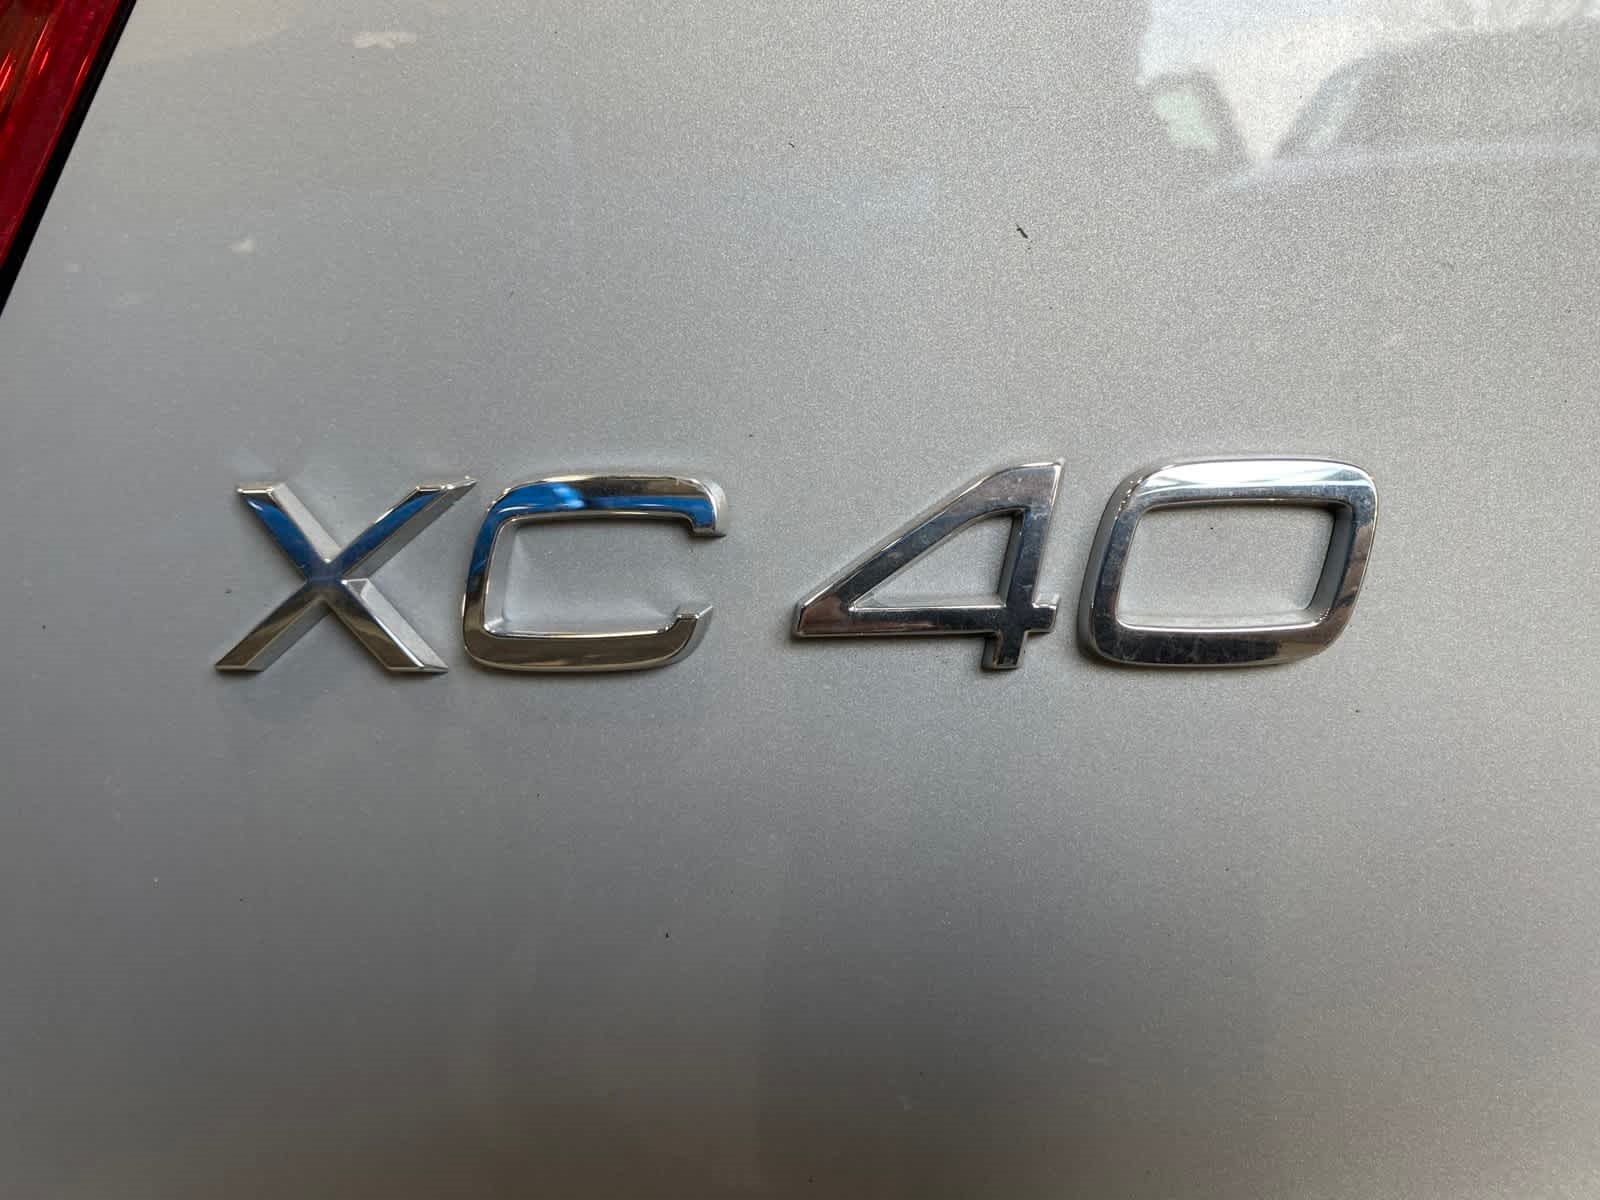 2023 Volvo XC40 B5 Plus Dark Theme